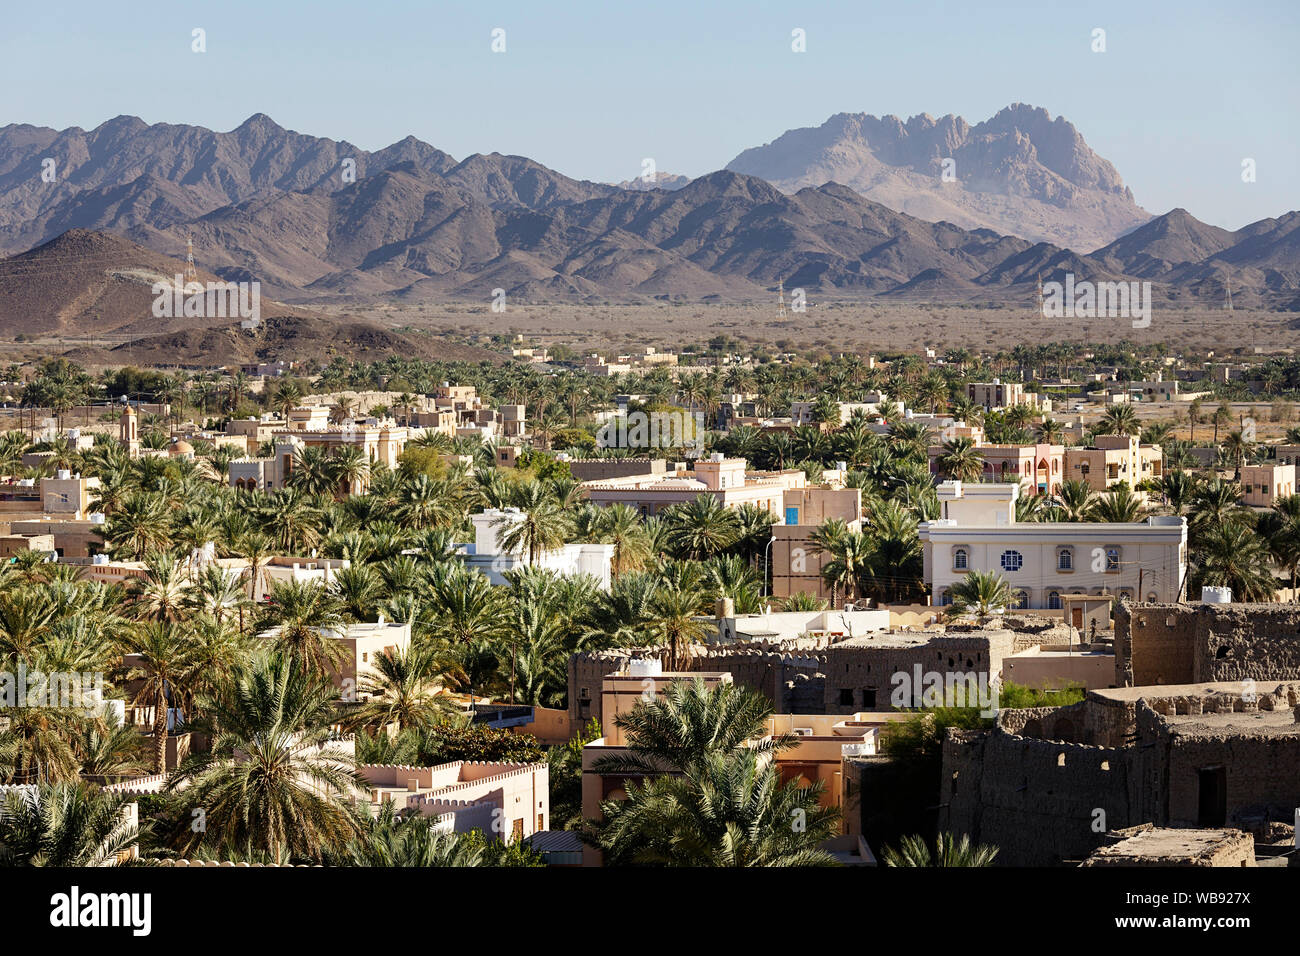 Dorf in einer Oase, Oman Stockfoto